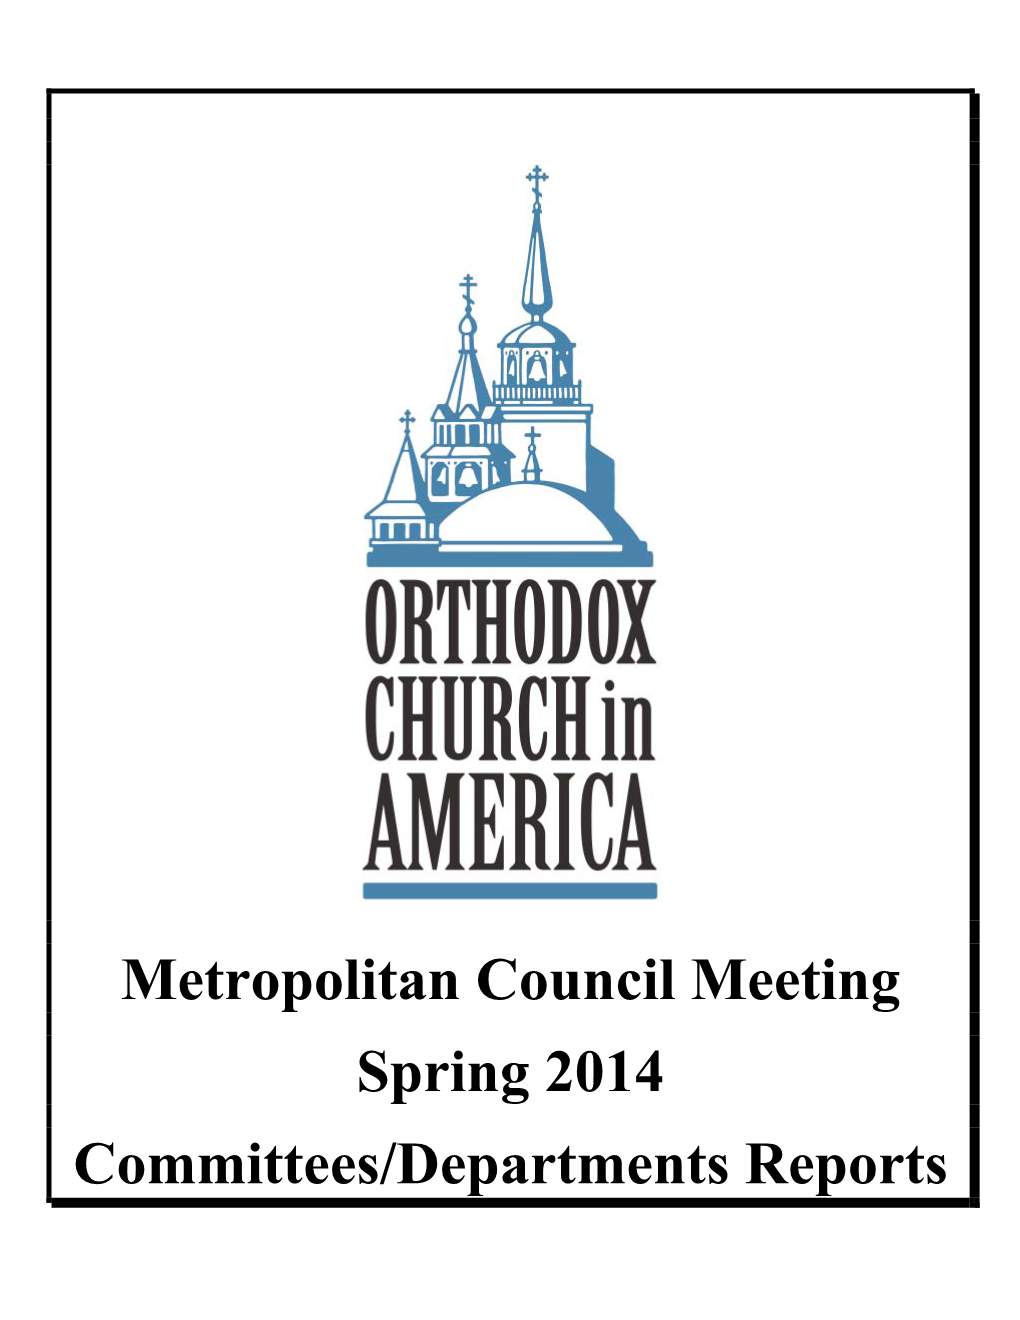 Metropolitan Council Meeting Spring 2014